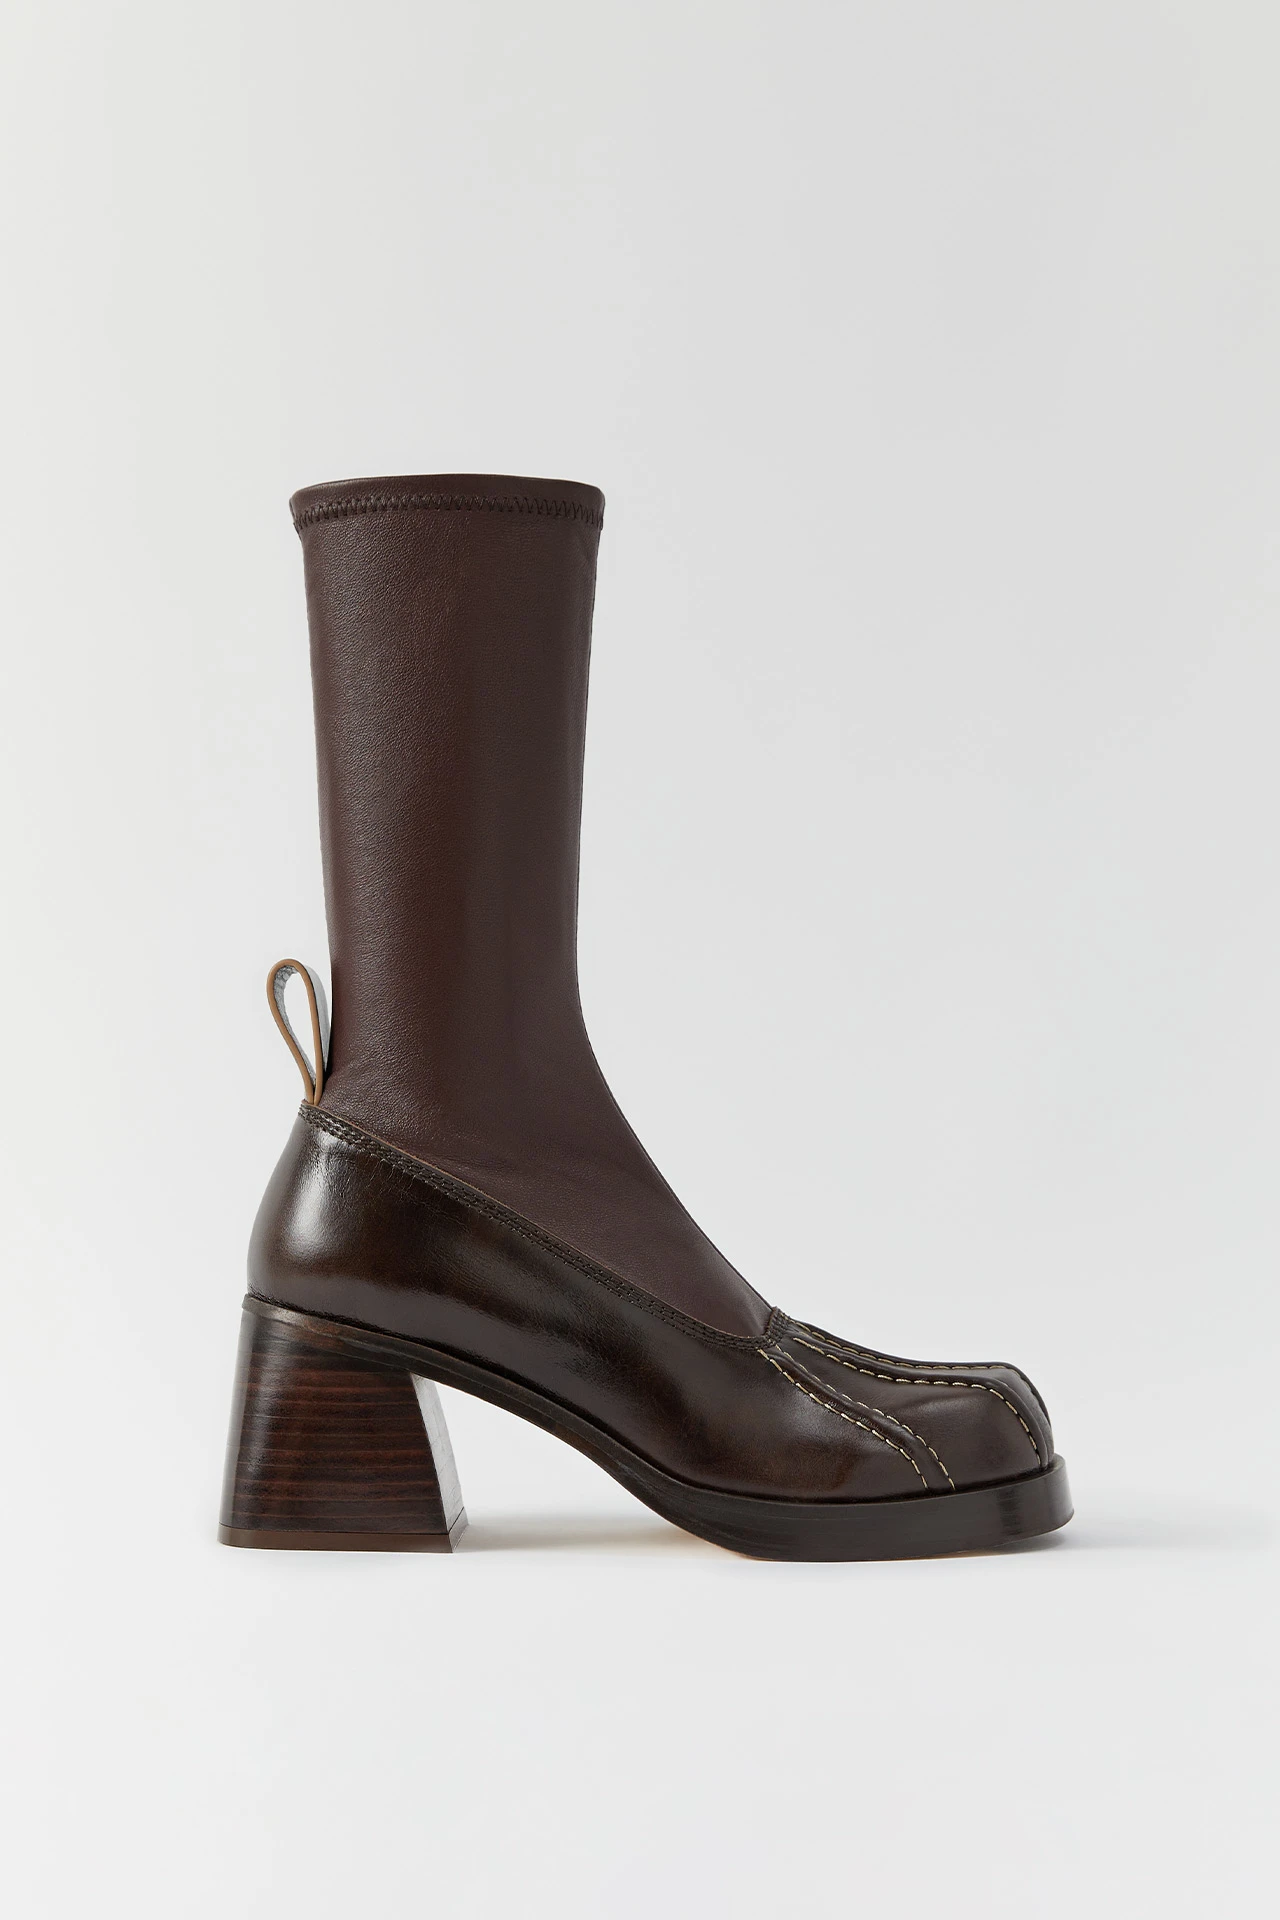 miista-mako-brown-boots-1